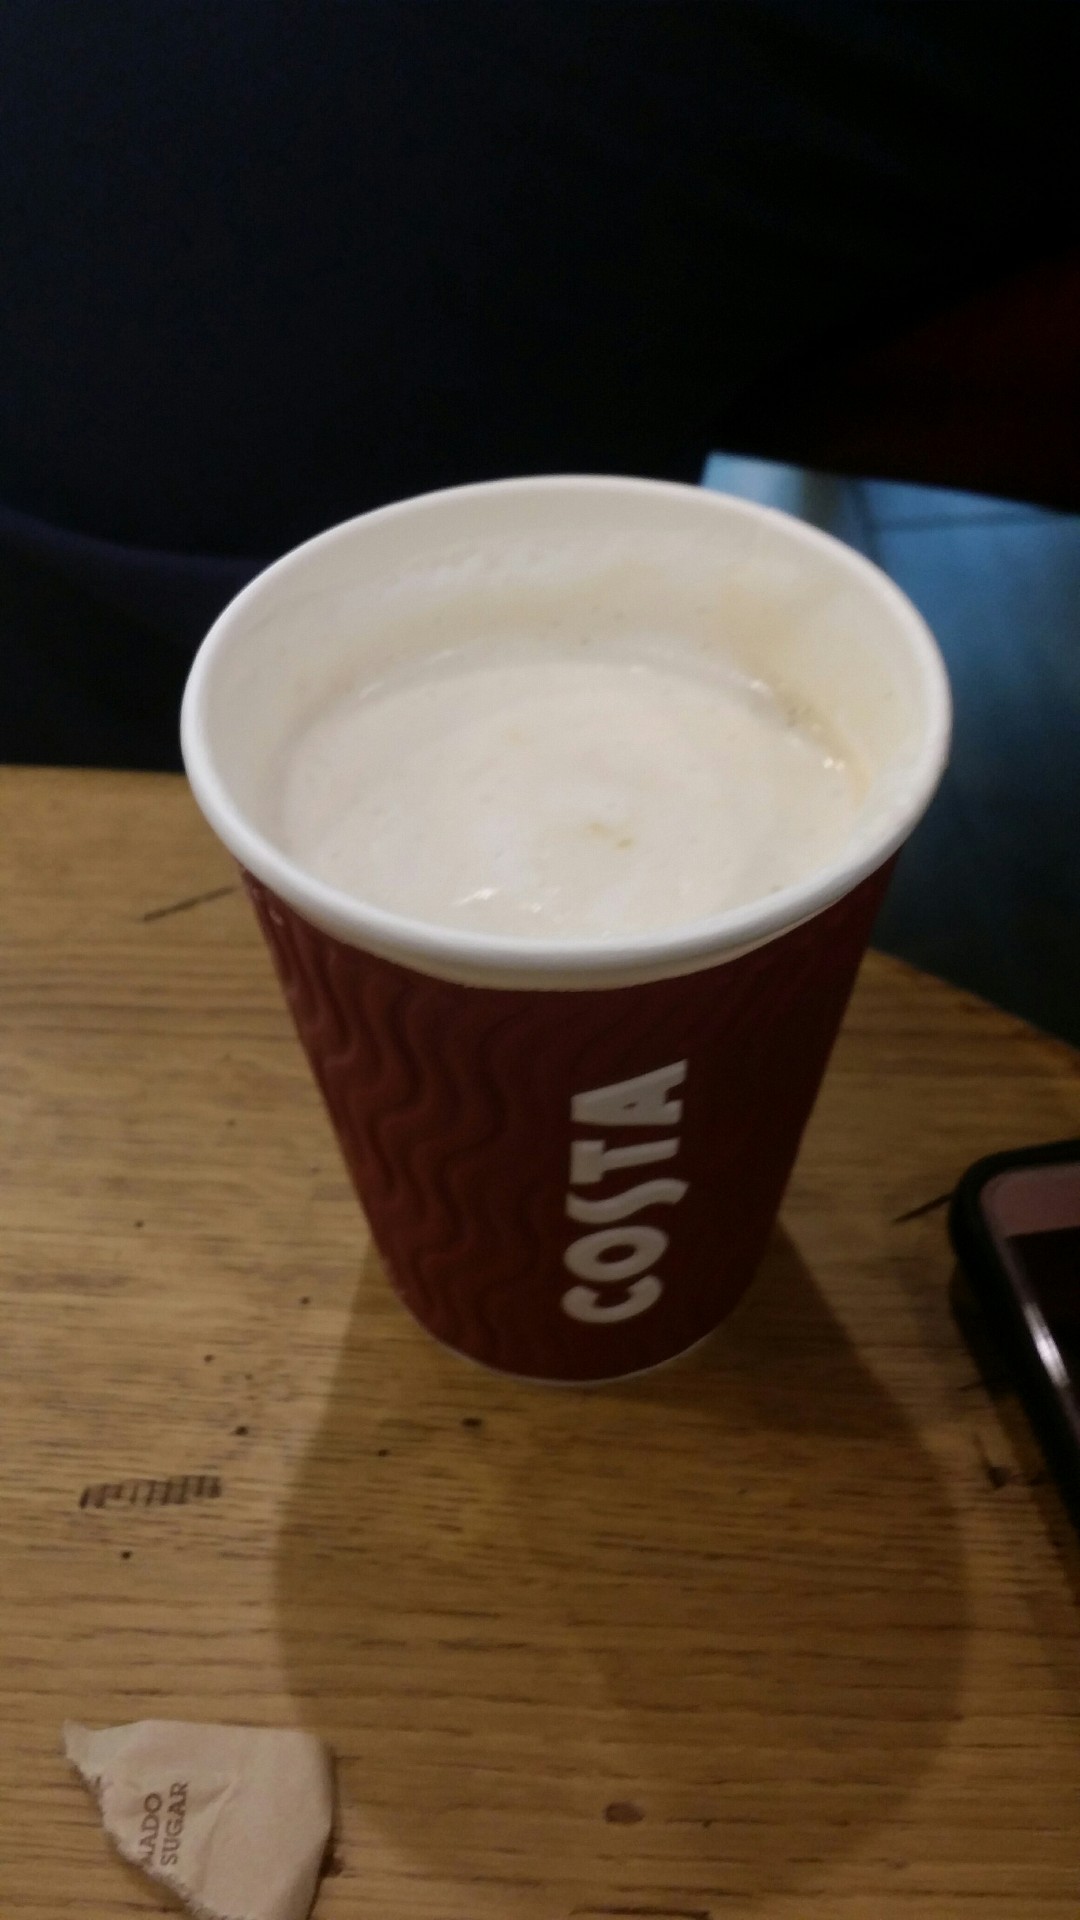 Hot latte @ كوستا كوفي - البحرين